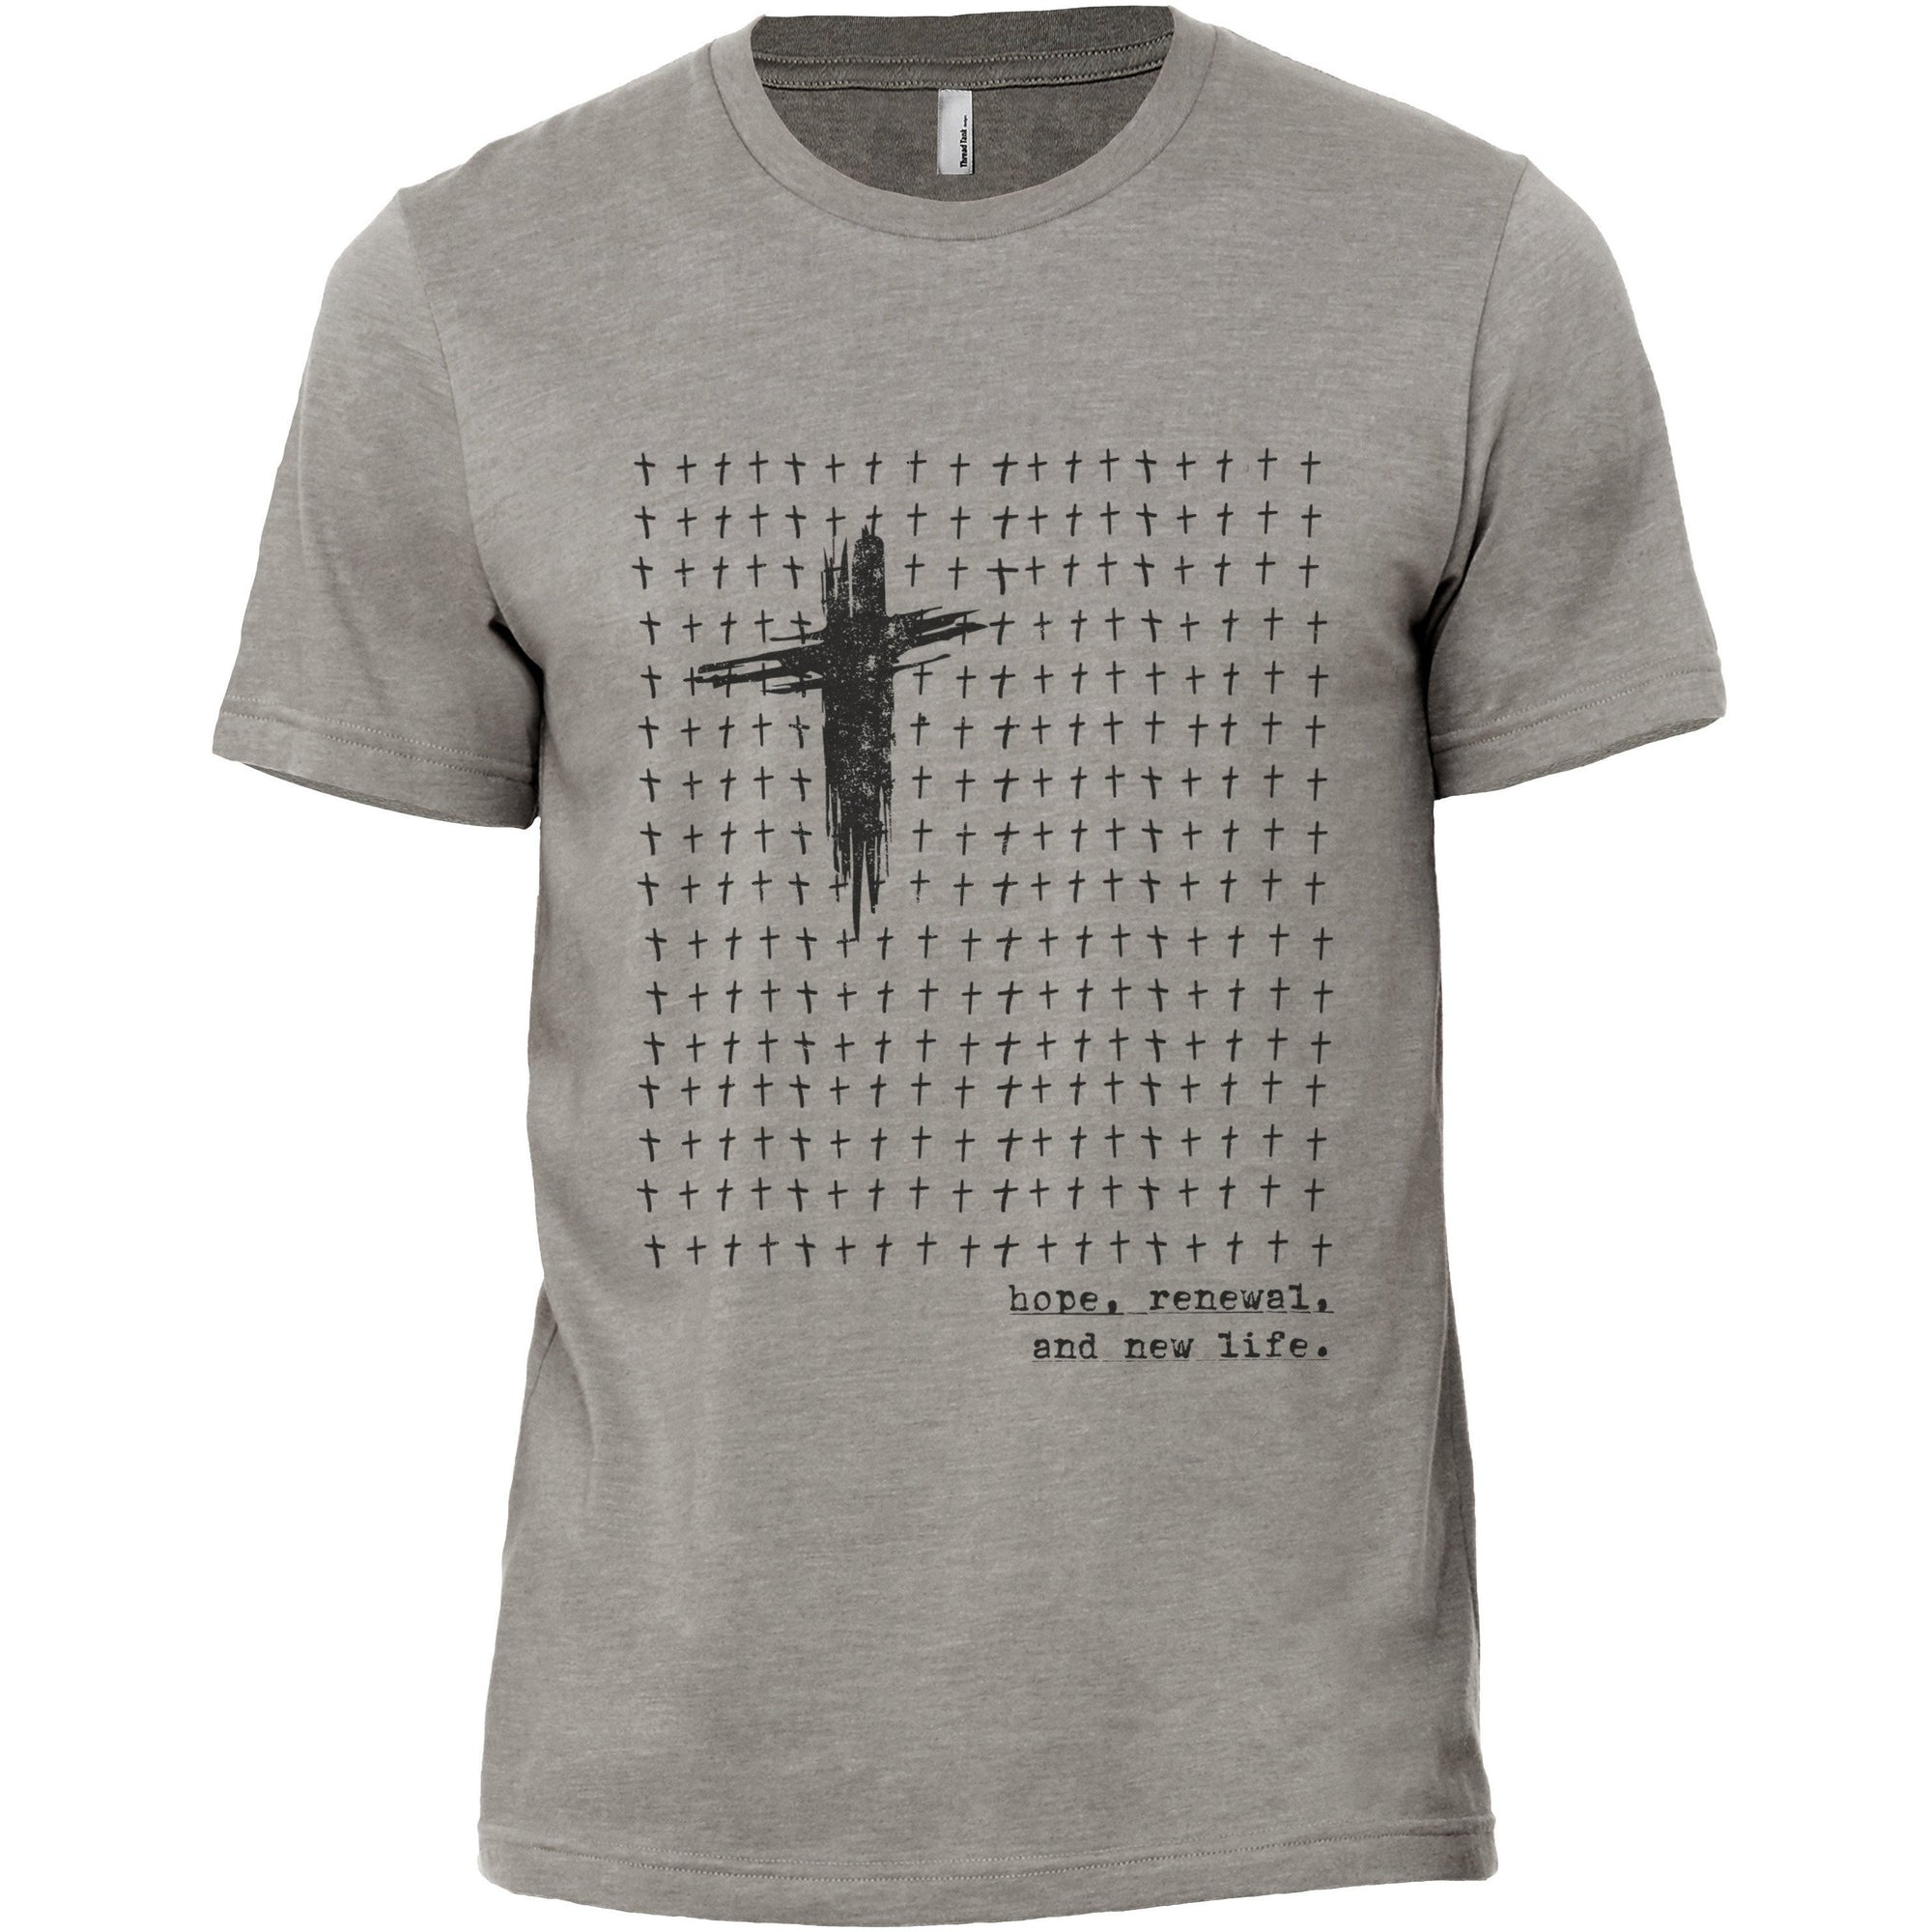 Hope Renewal And New Life Military Grey Printed Graphic Men's Crew T-Shirt Tee